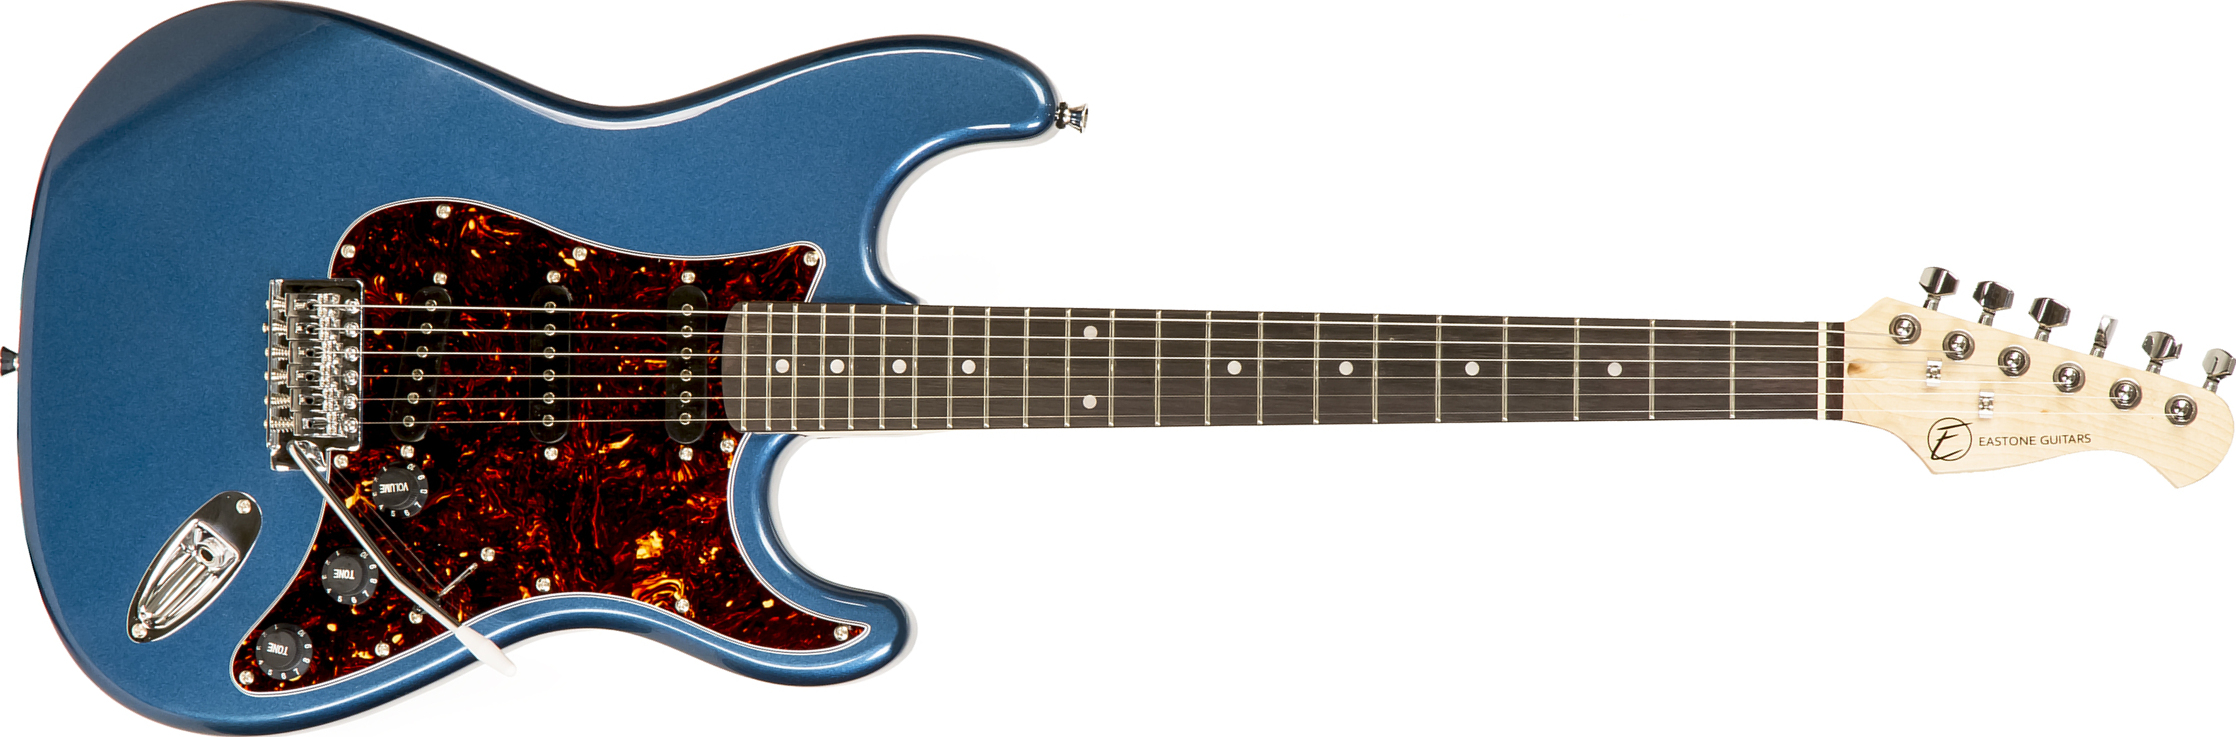 Eastone Str70t 3s Trem Pur - Lake Placid Blue - Elektrische gitaar in Str-vorm - Main picture